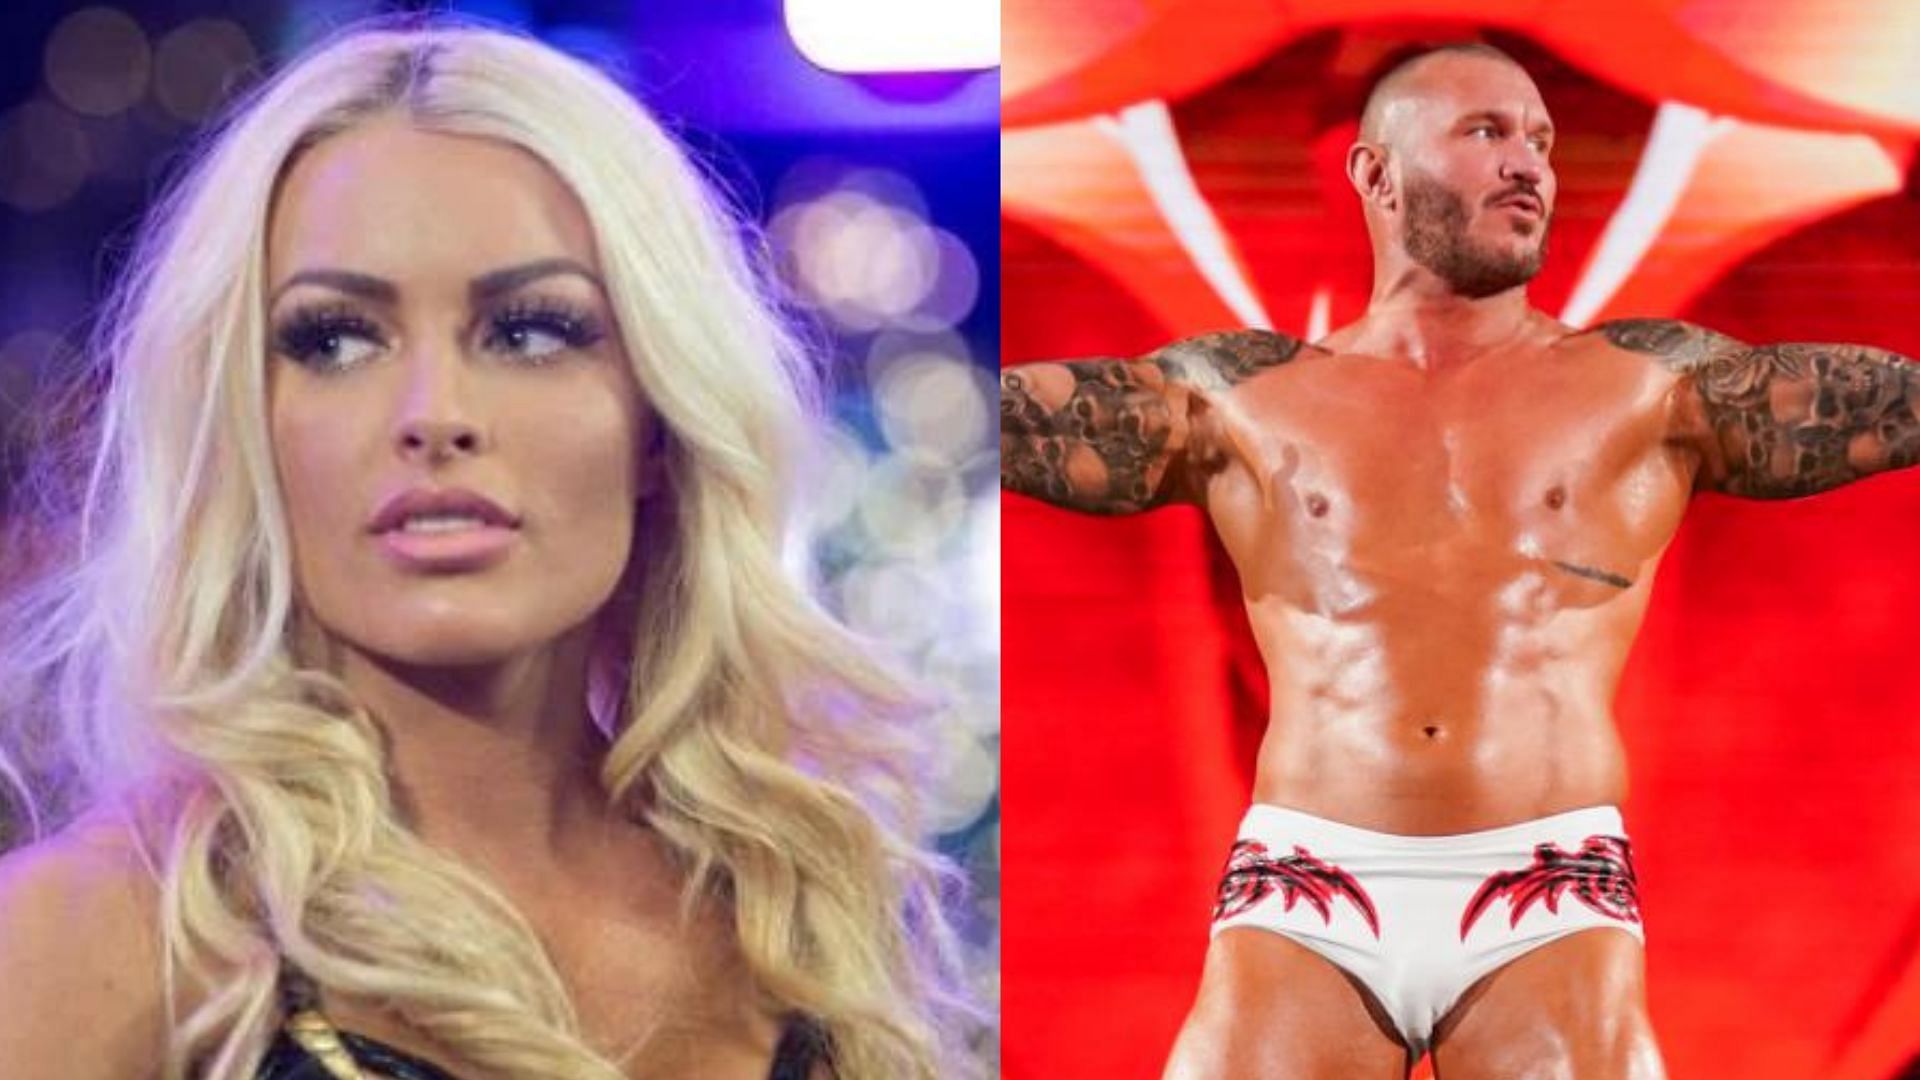 WWE Superstars Mandy Rose and Randy Orton